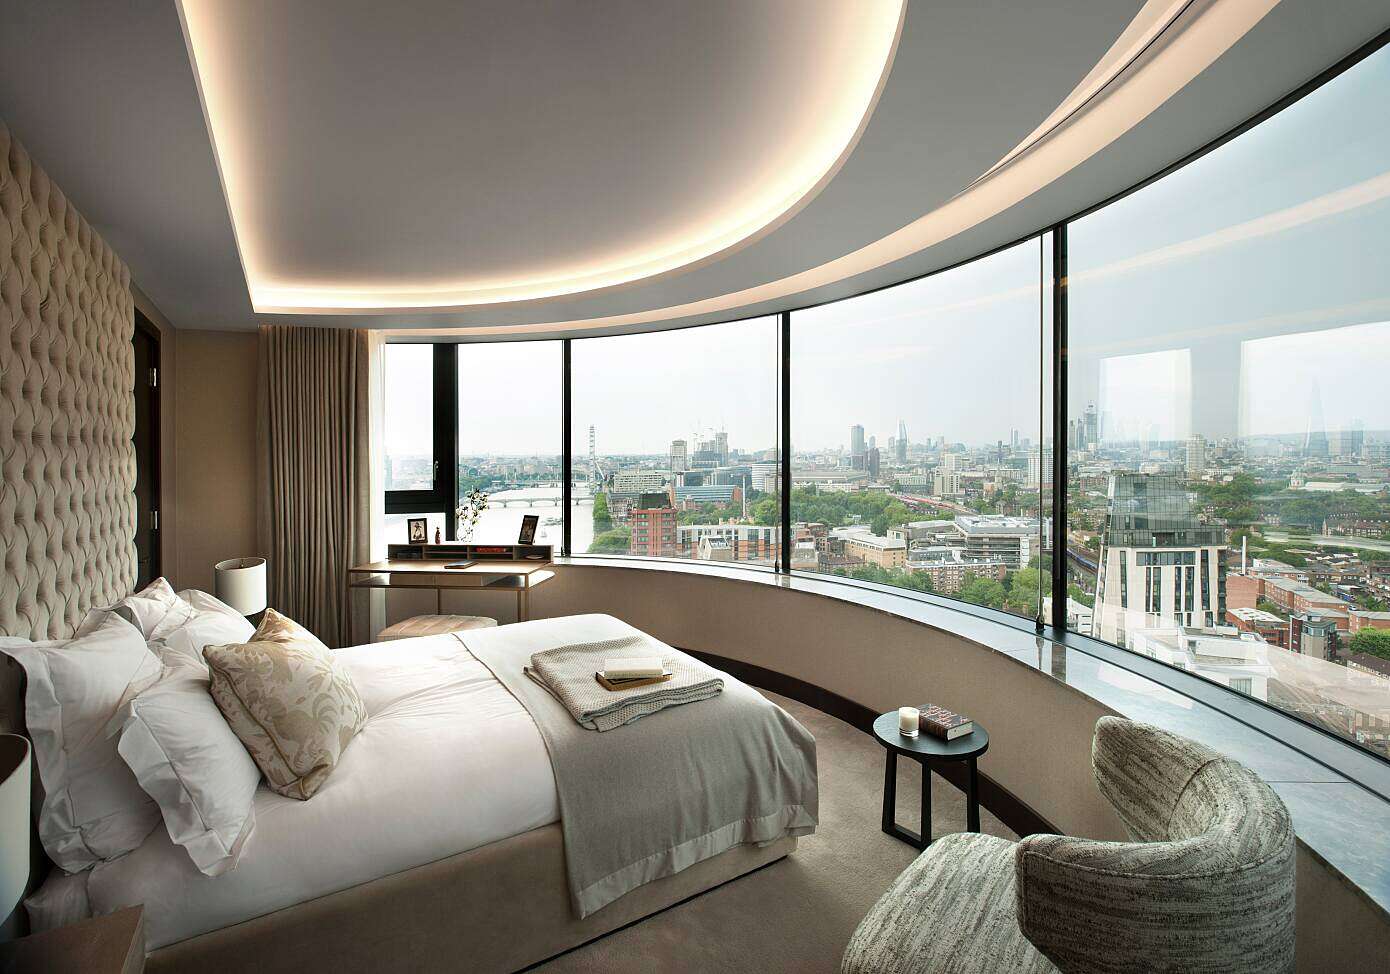 Corniche Penthouse by TG-Studio | HomeAdore - 1390 x 974 jpeg 145kB